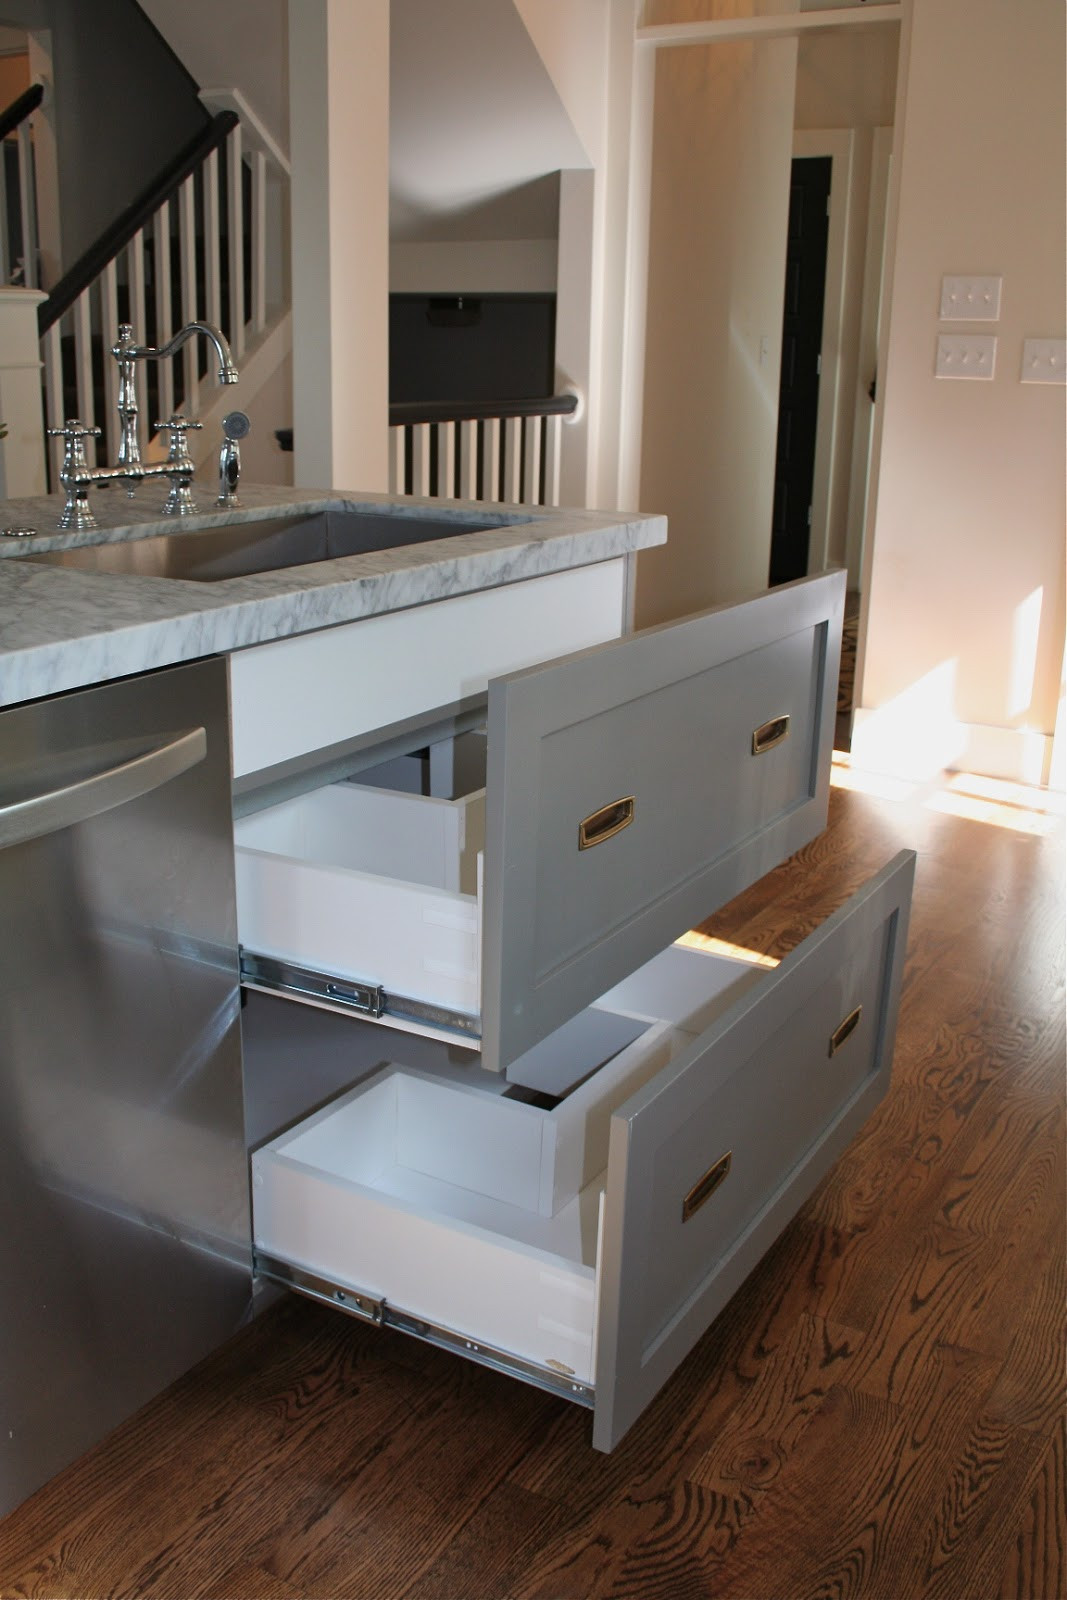 Best ideas about Kitchen Sink Cabinets
. Save or Pin design dump drawers under the kitchen sink Now.